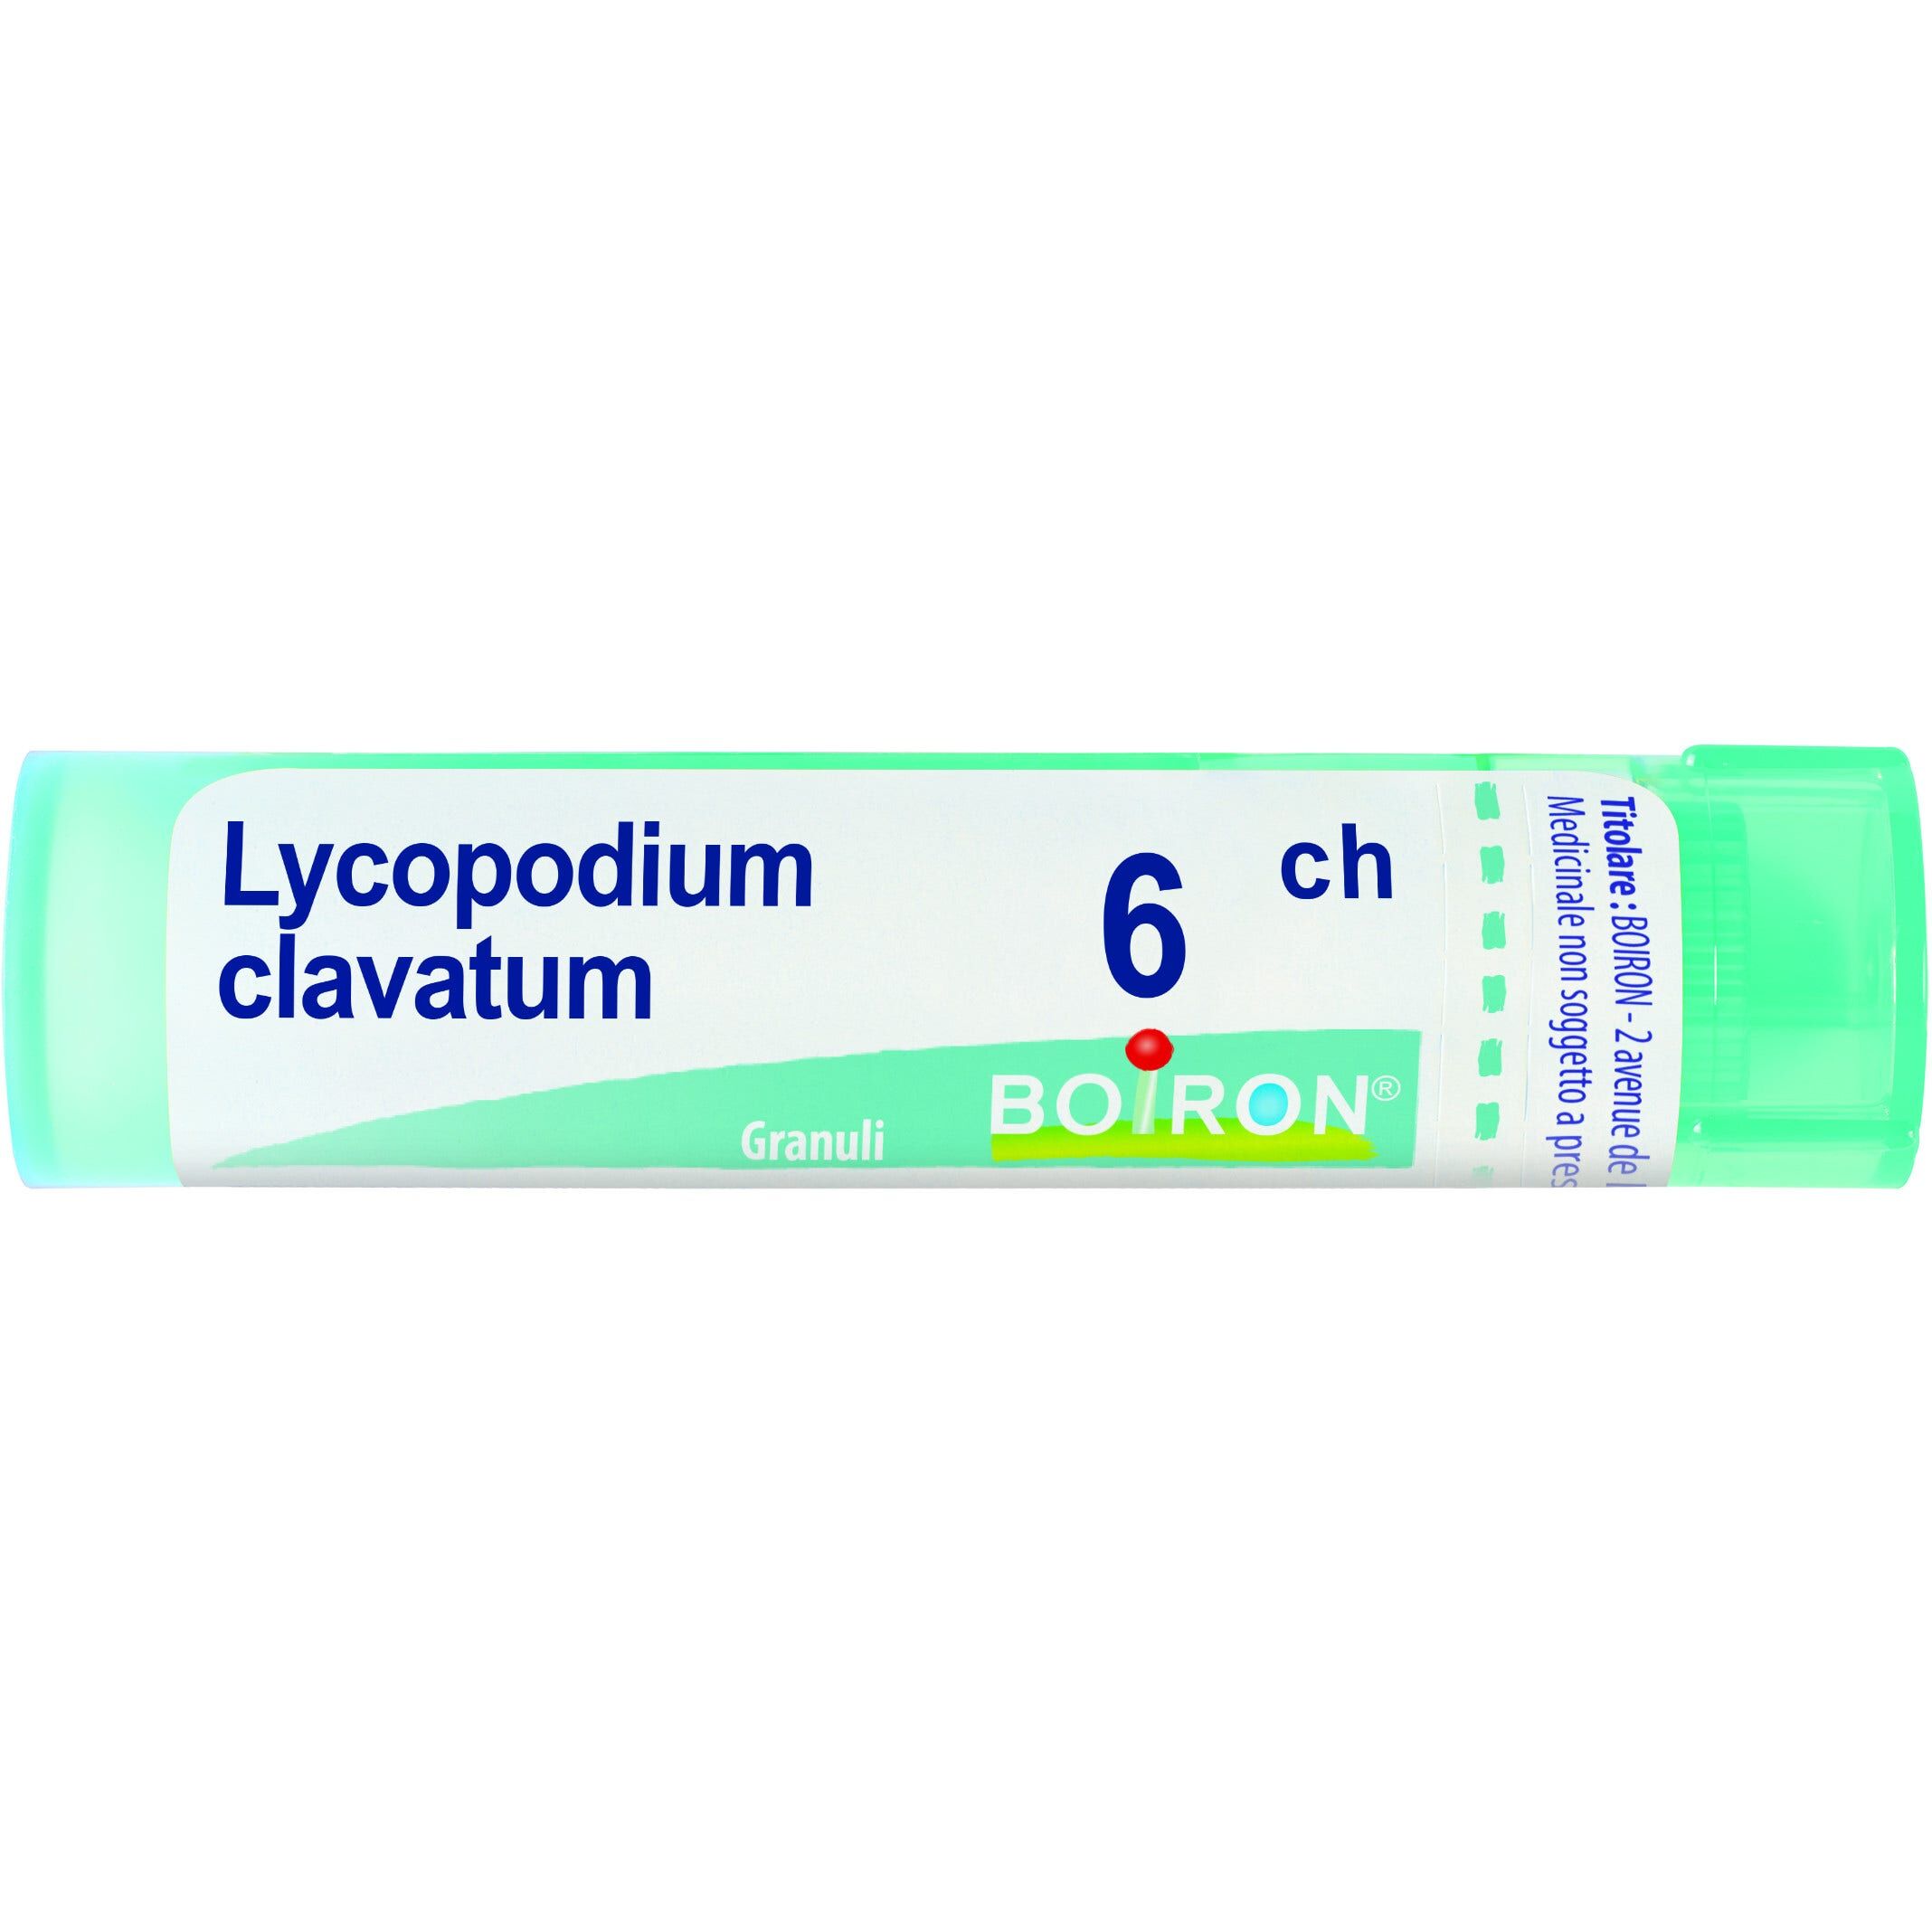 Boiron Lycopodium Clavatum 6 Ch 80 Gr